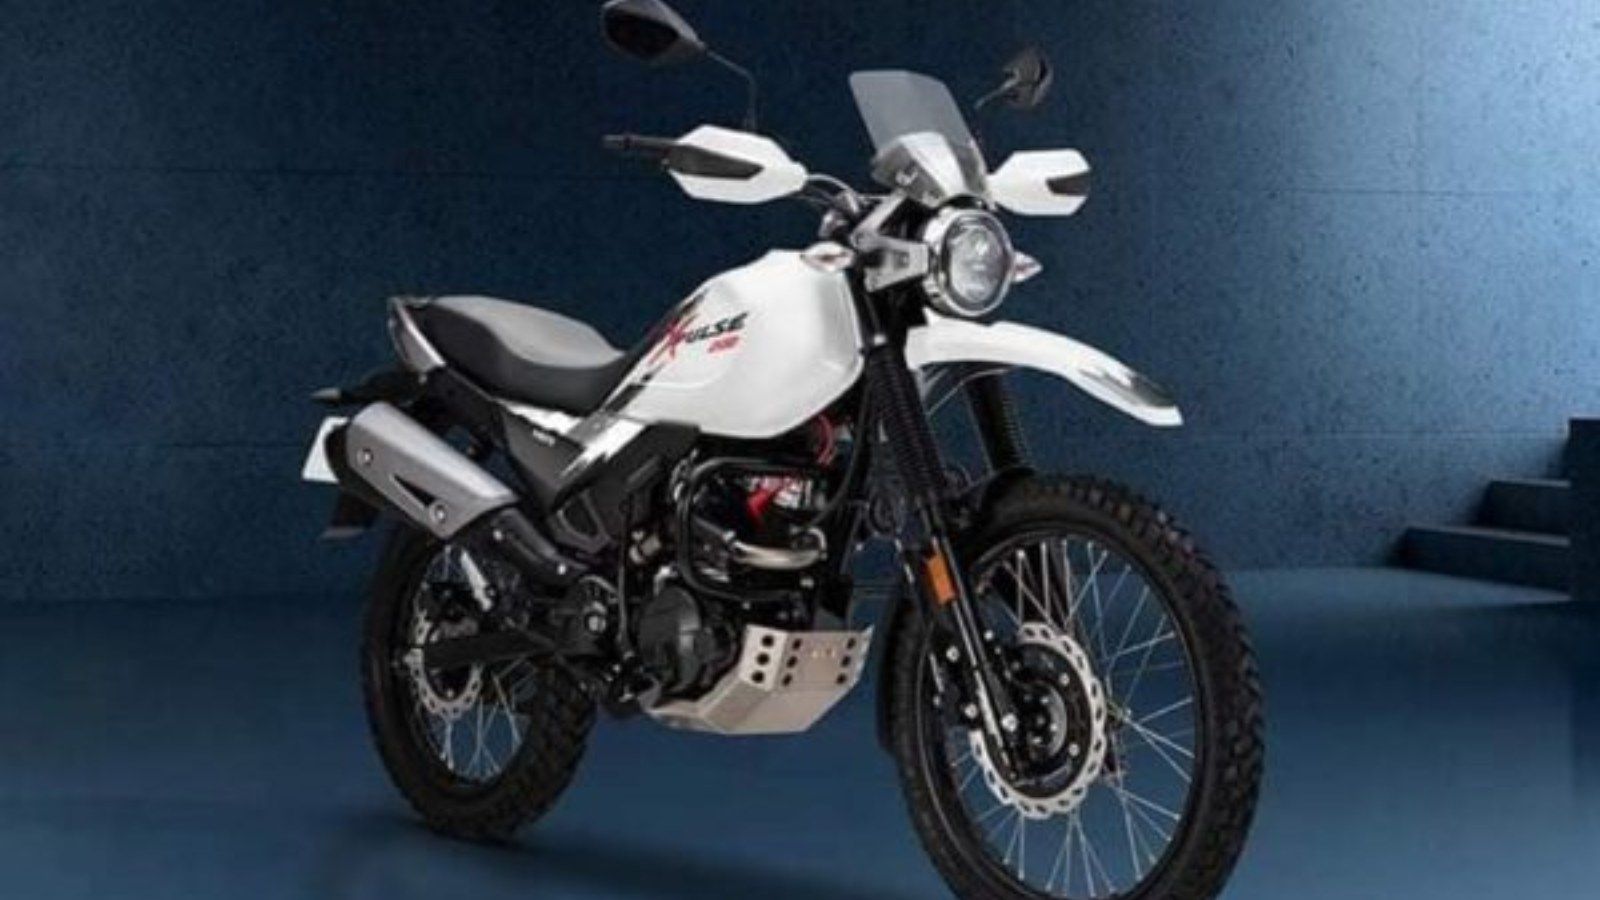 Xpulse 200 | Hero motocorp, Dirtbikes, Bollywood posters